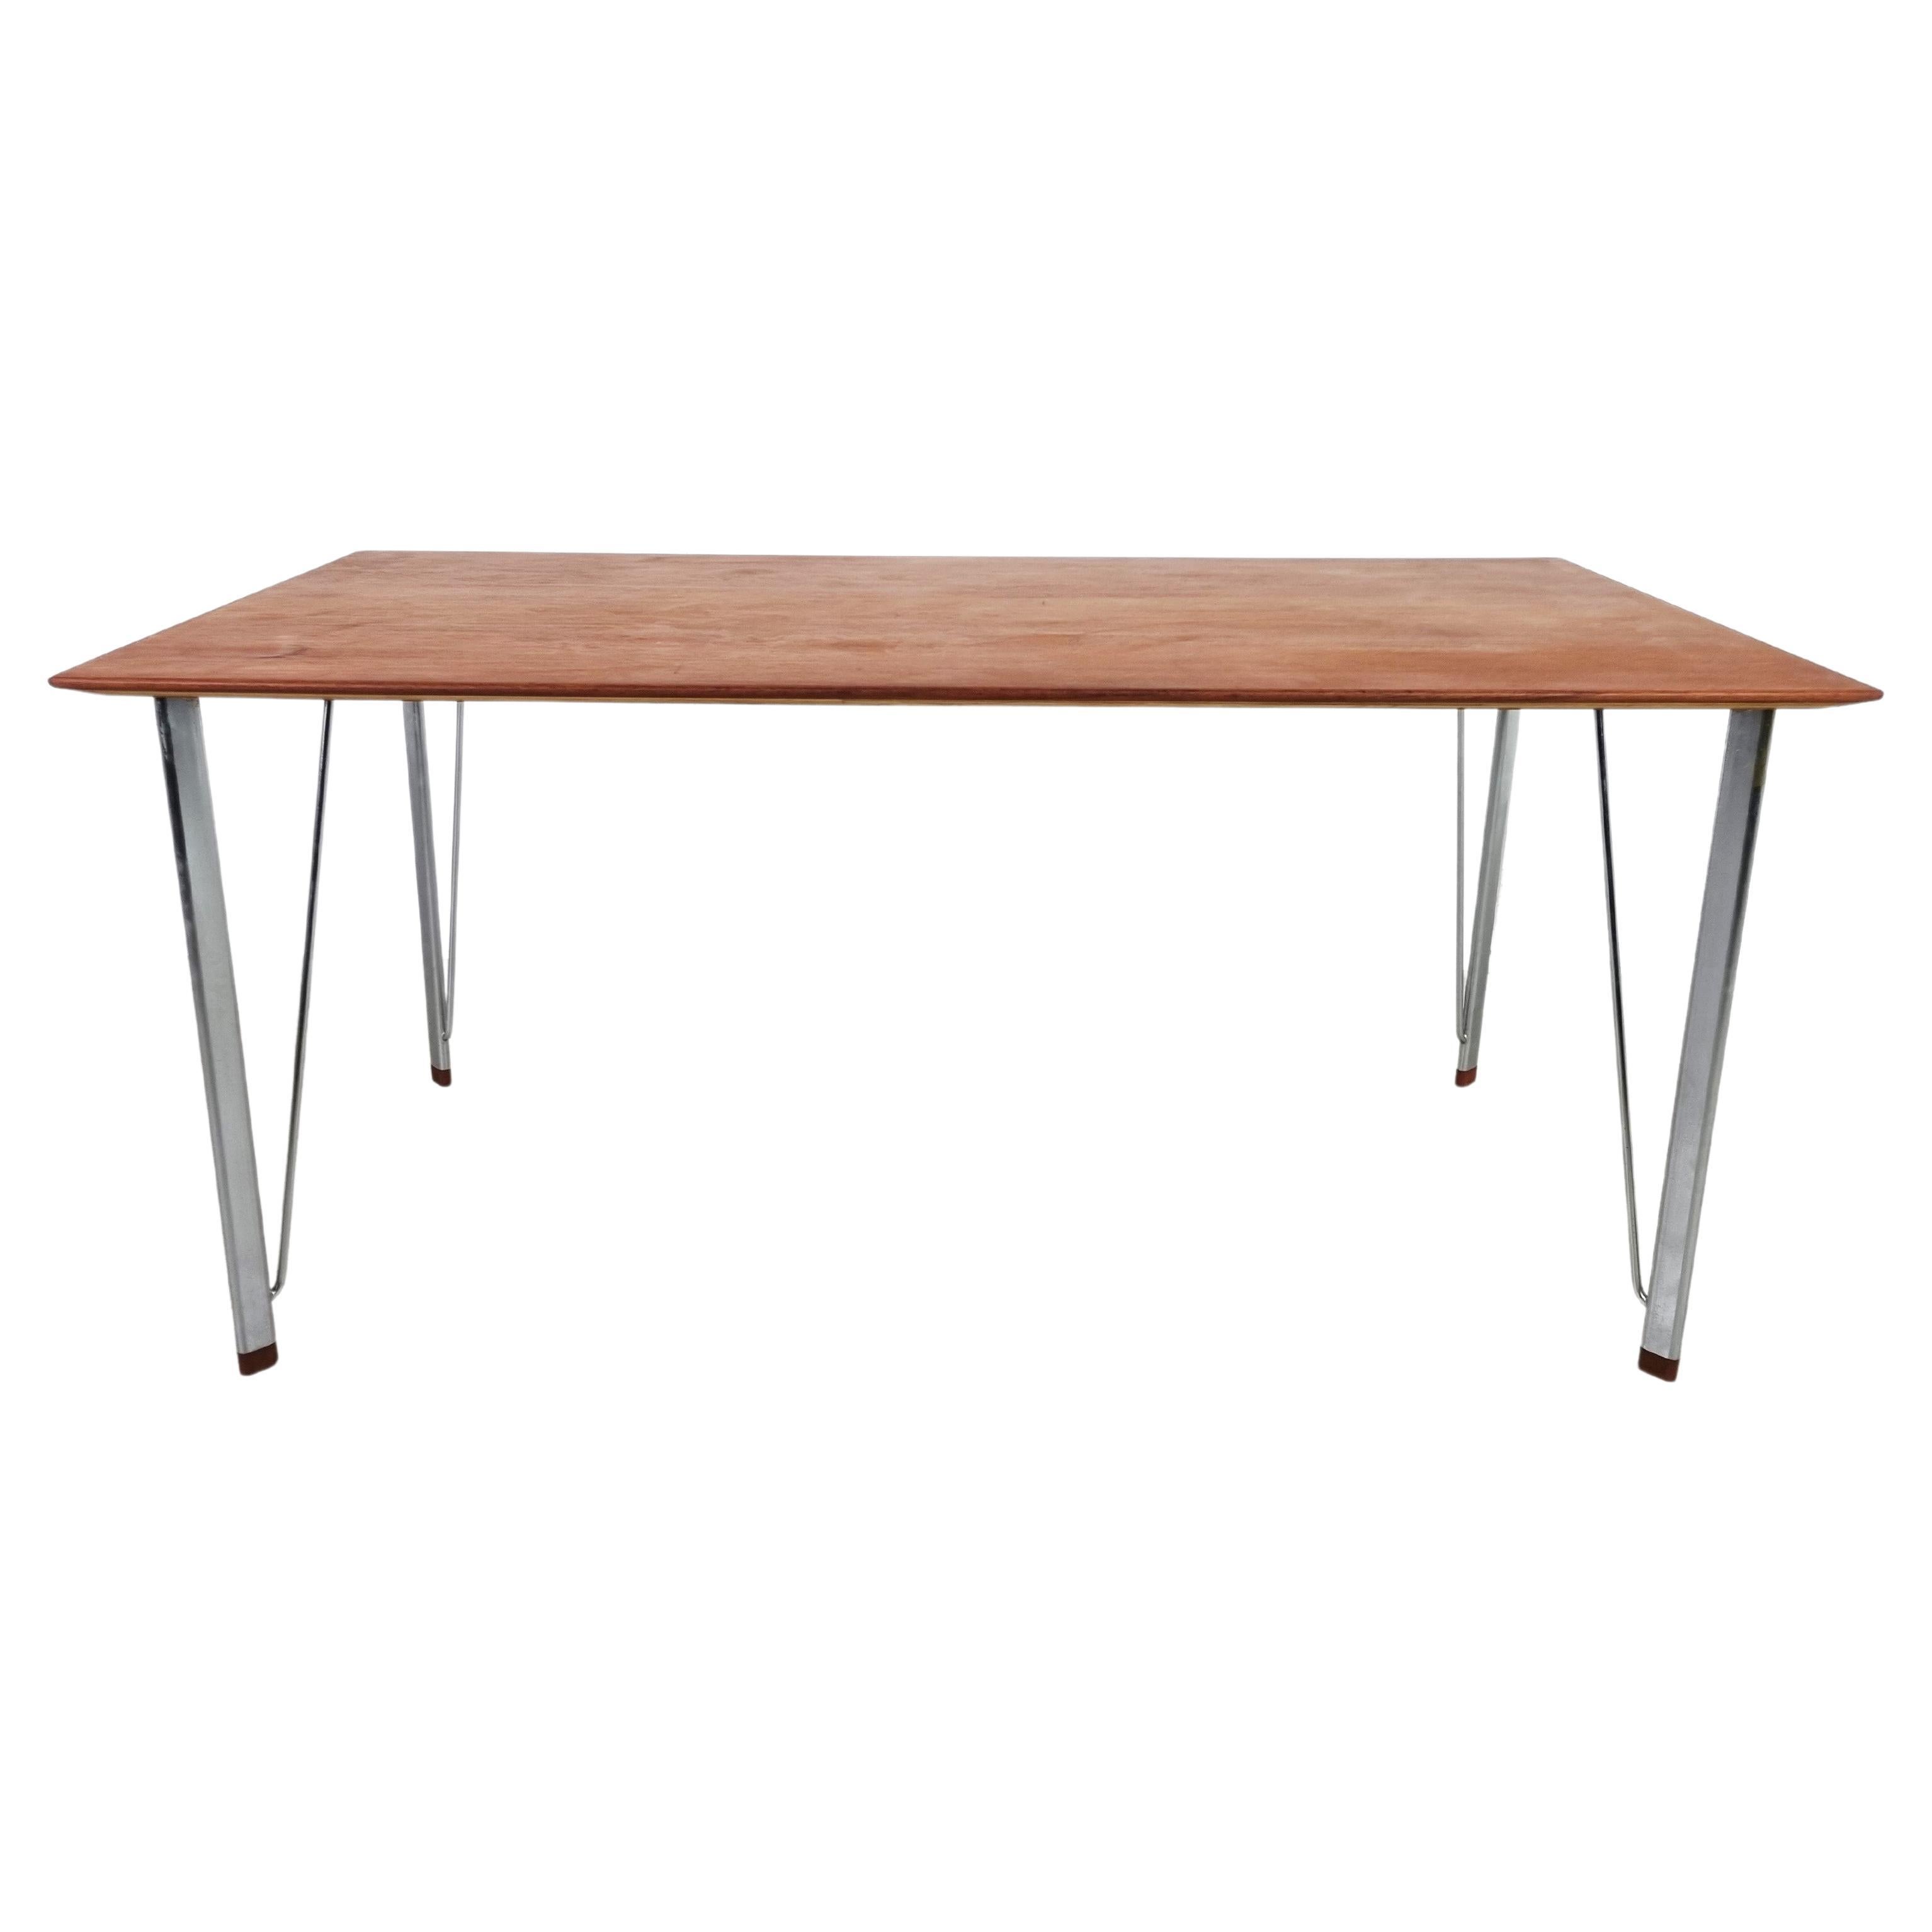 Rare Table Model 3605 by Arne Jacobsen, 1950s For Sale